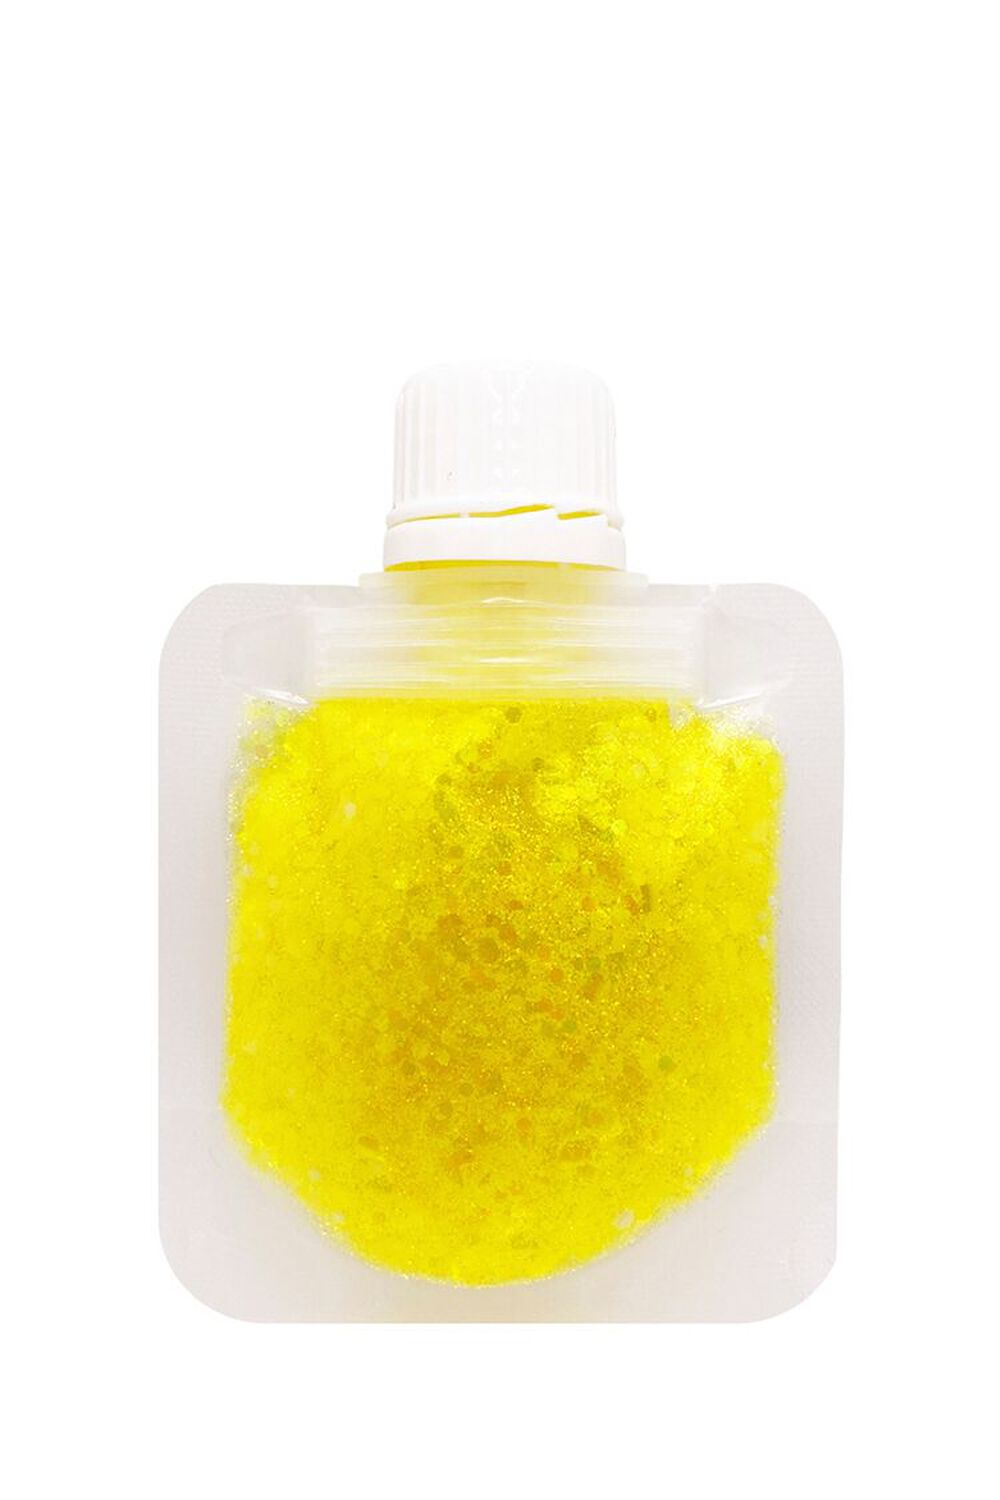 NEON YELLOW Suck Less Face & Body Neon Lemon Glitter Gelly, image 1